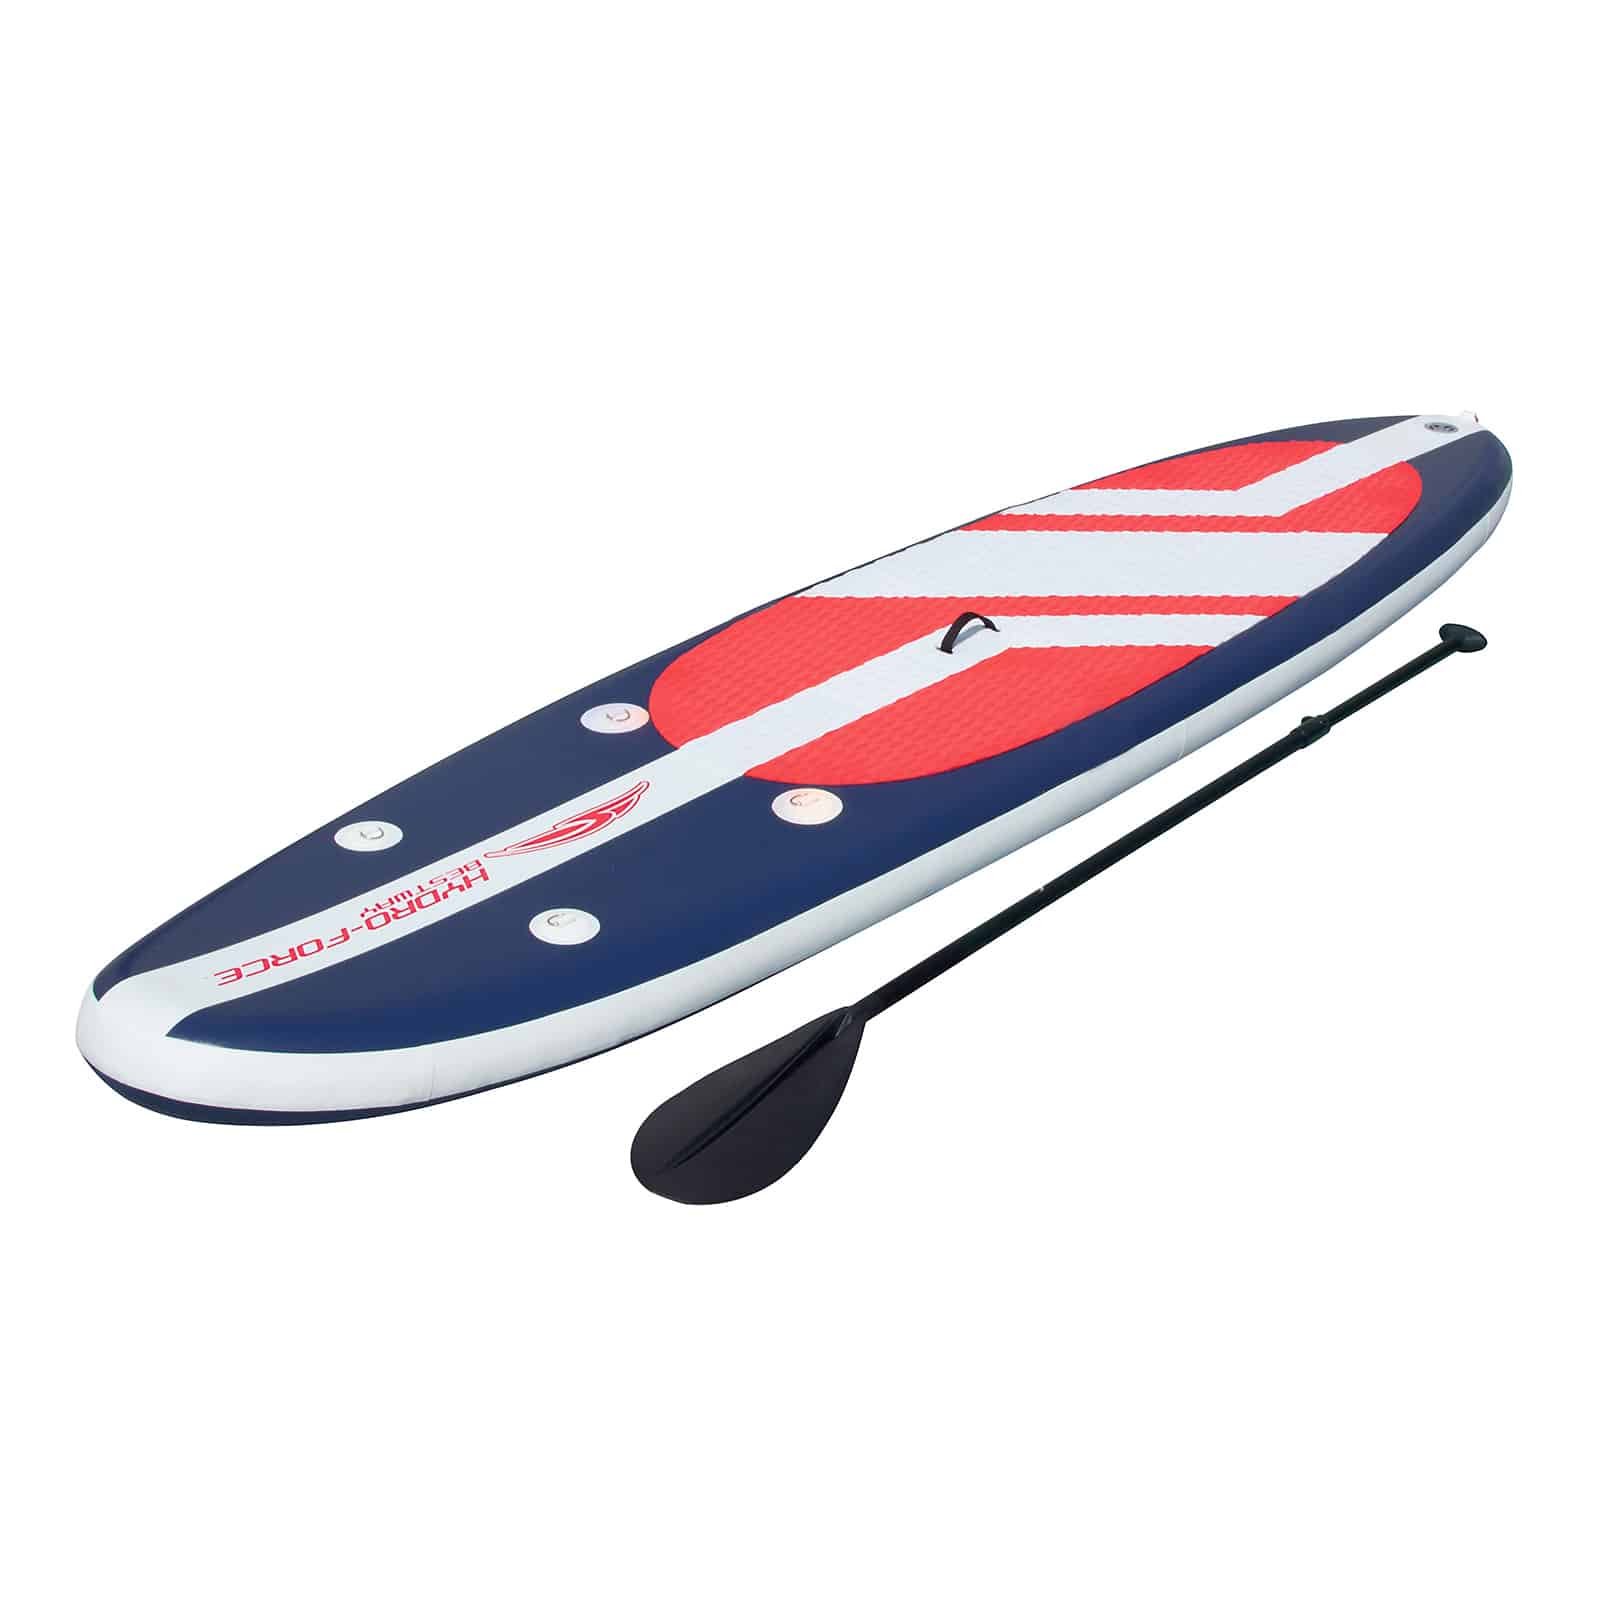 Tabla Paddle Surf Hinchable Bestway Hydro-force Long Tail 335x76x15 Cm Con Remo, Bomba Y Bolsa